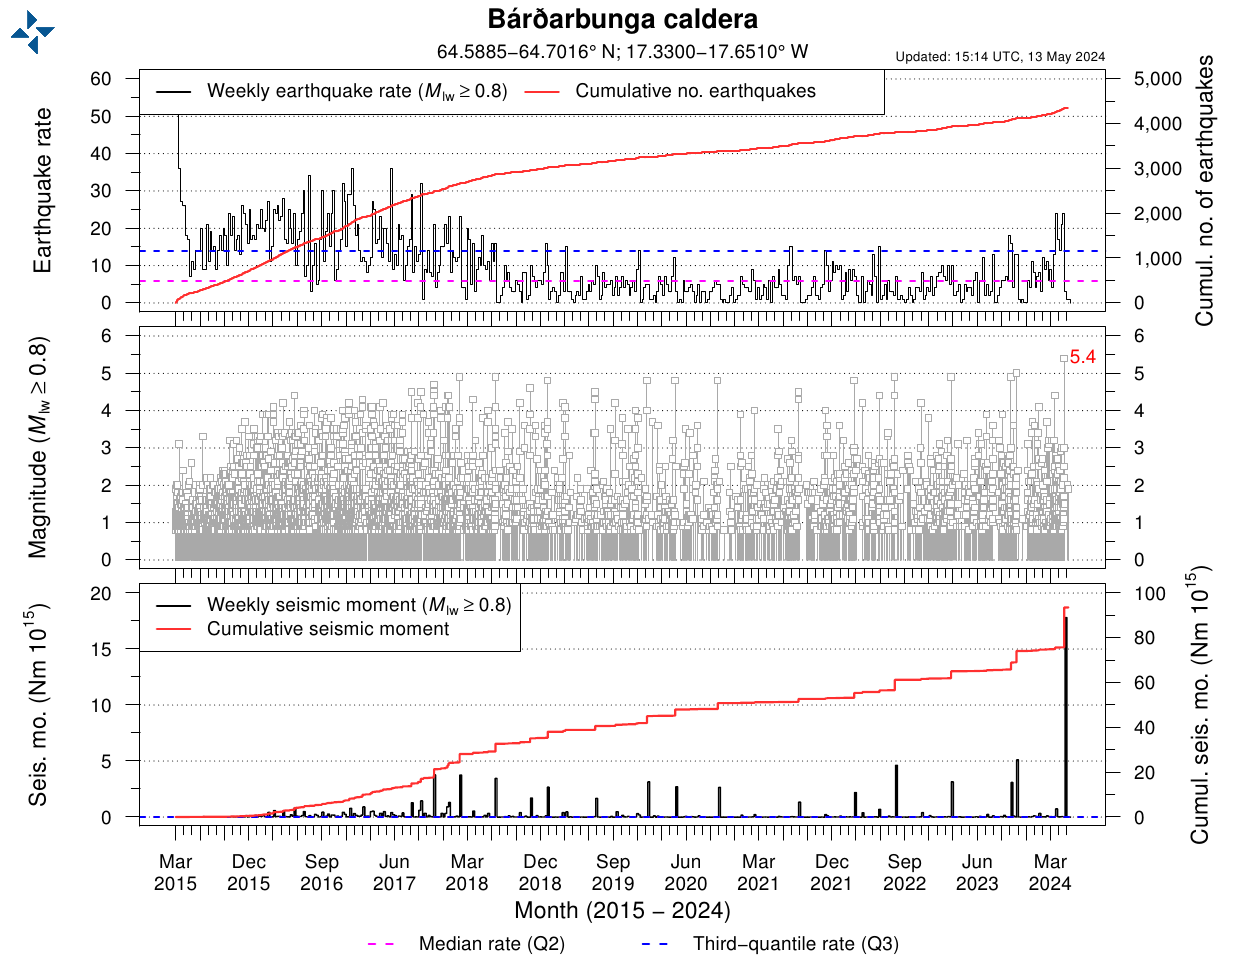 Bárðarbunga: seismicity rates